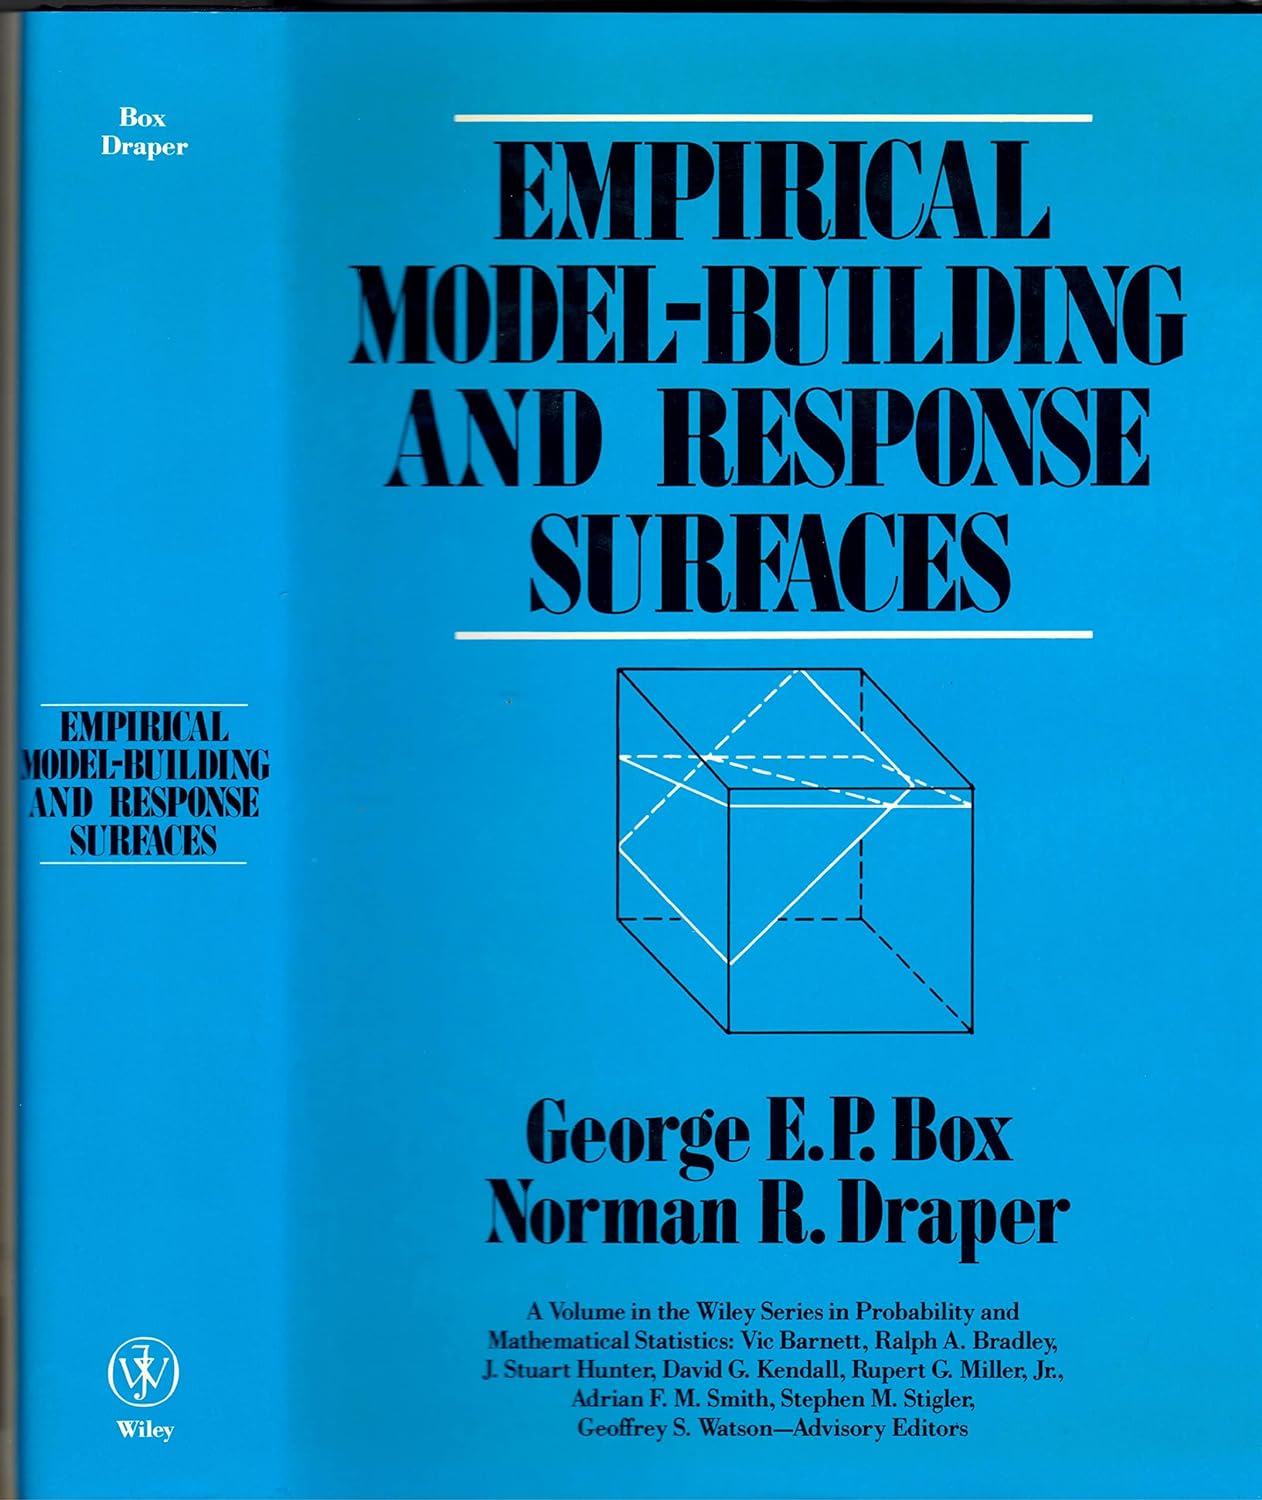 Empirical model-building and response surfaces / George E. P. Box, Norman R. Draper